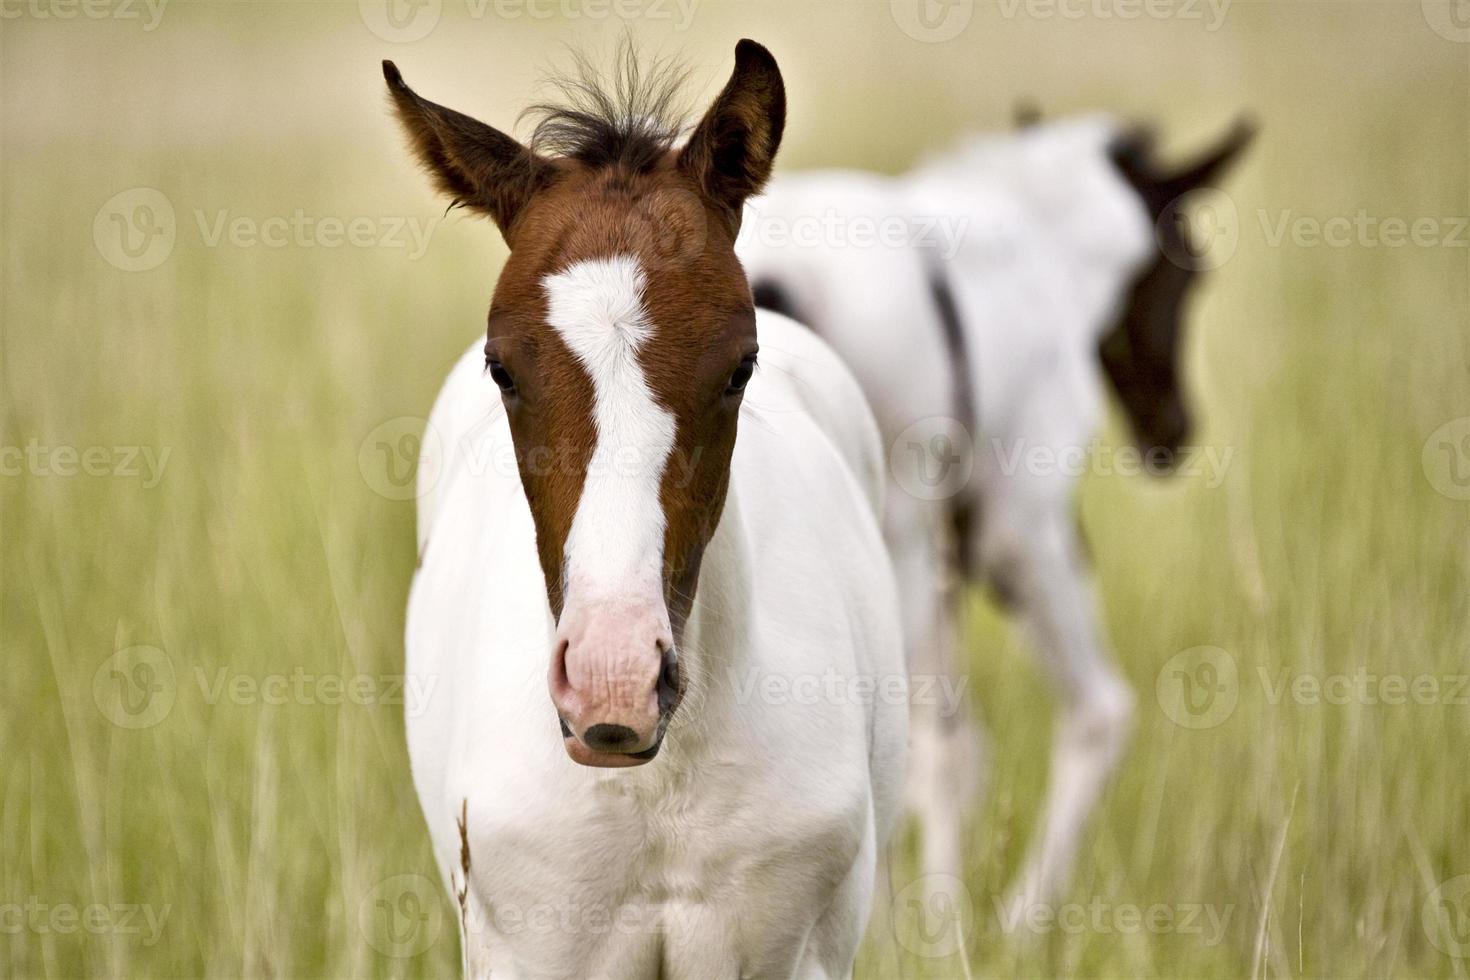 Horse mare and colt Saskatchewan Field photo